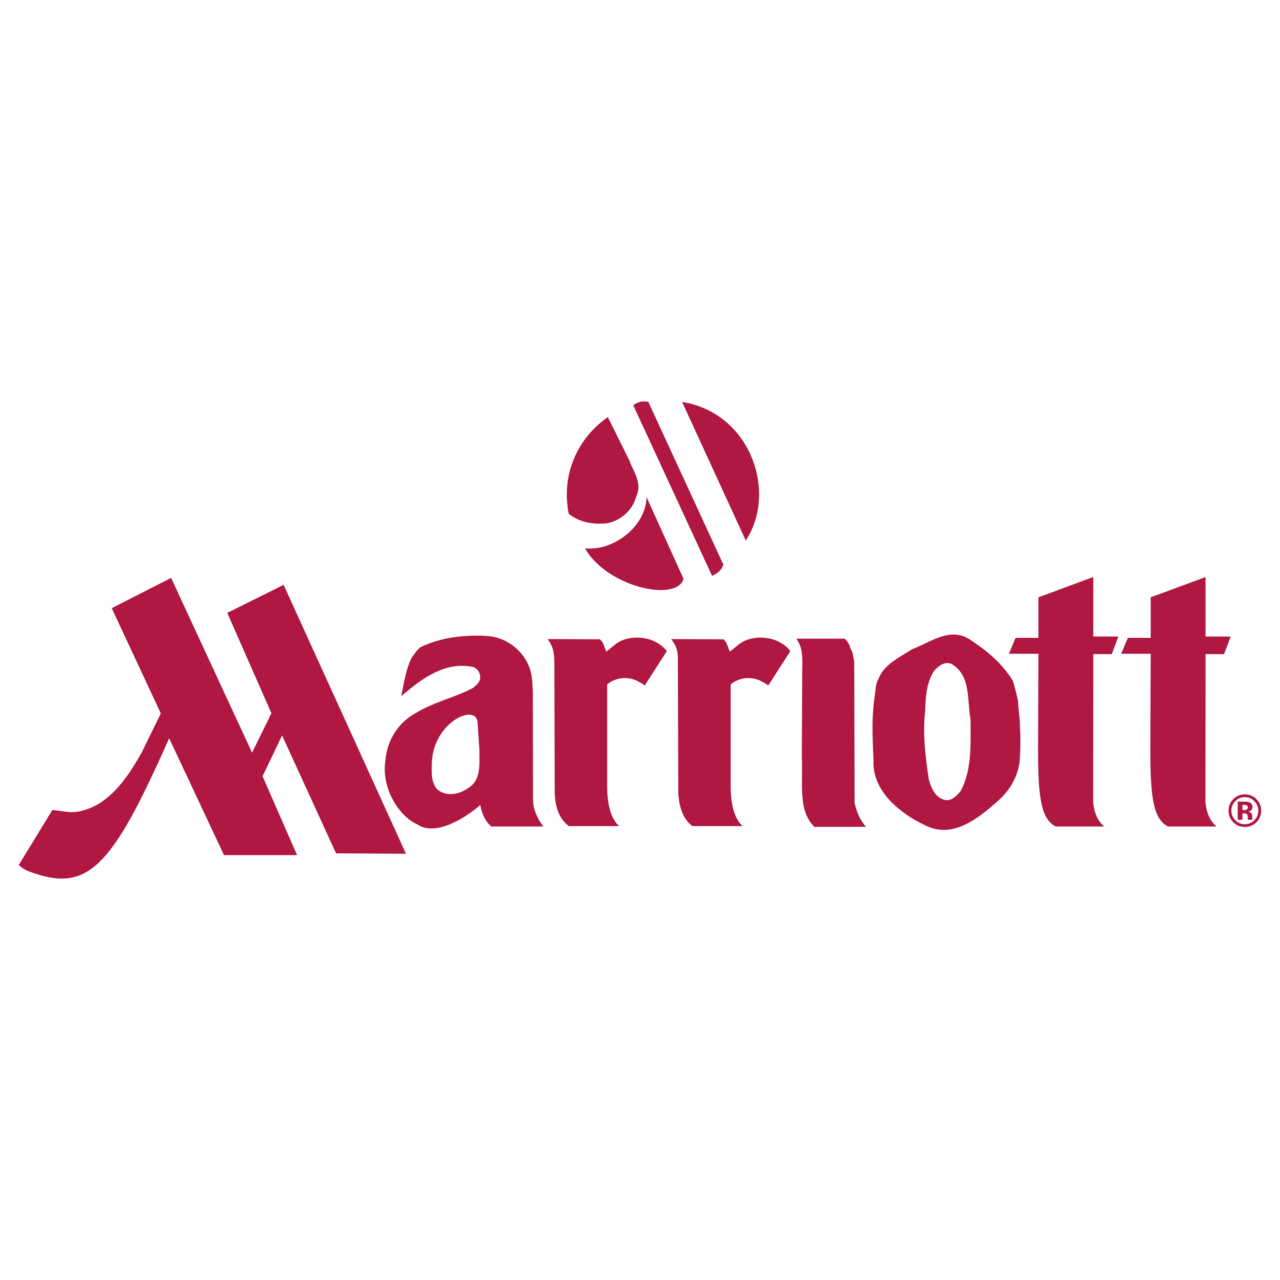 marriott-logo.png